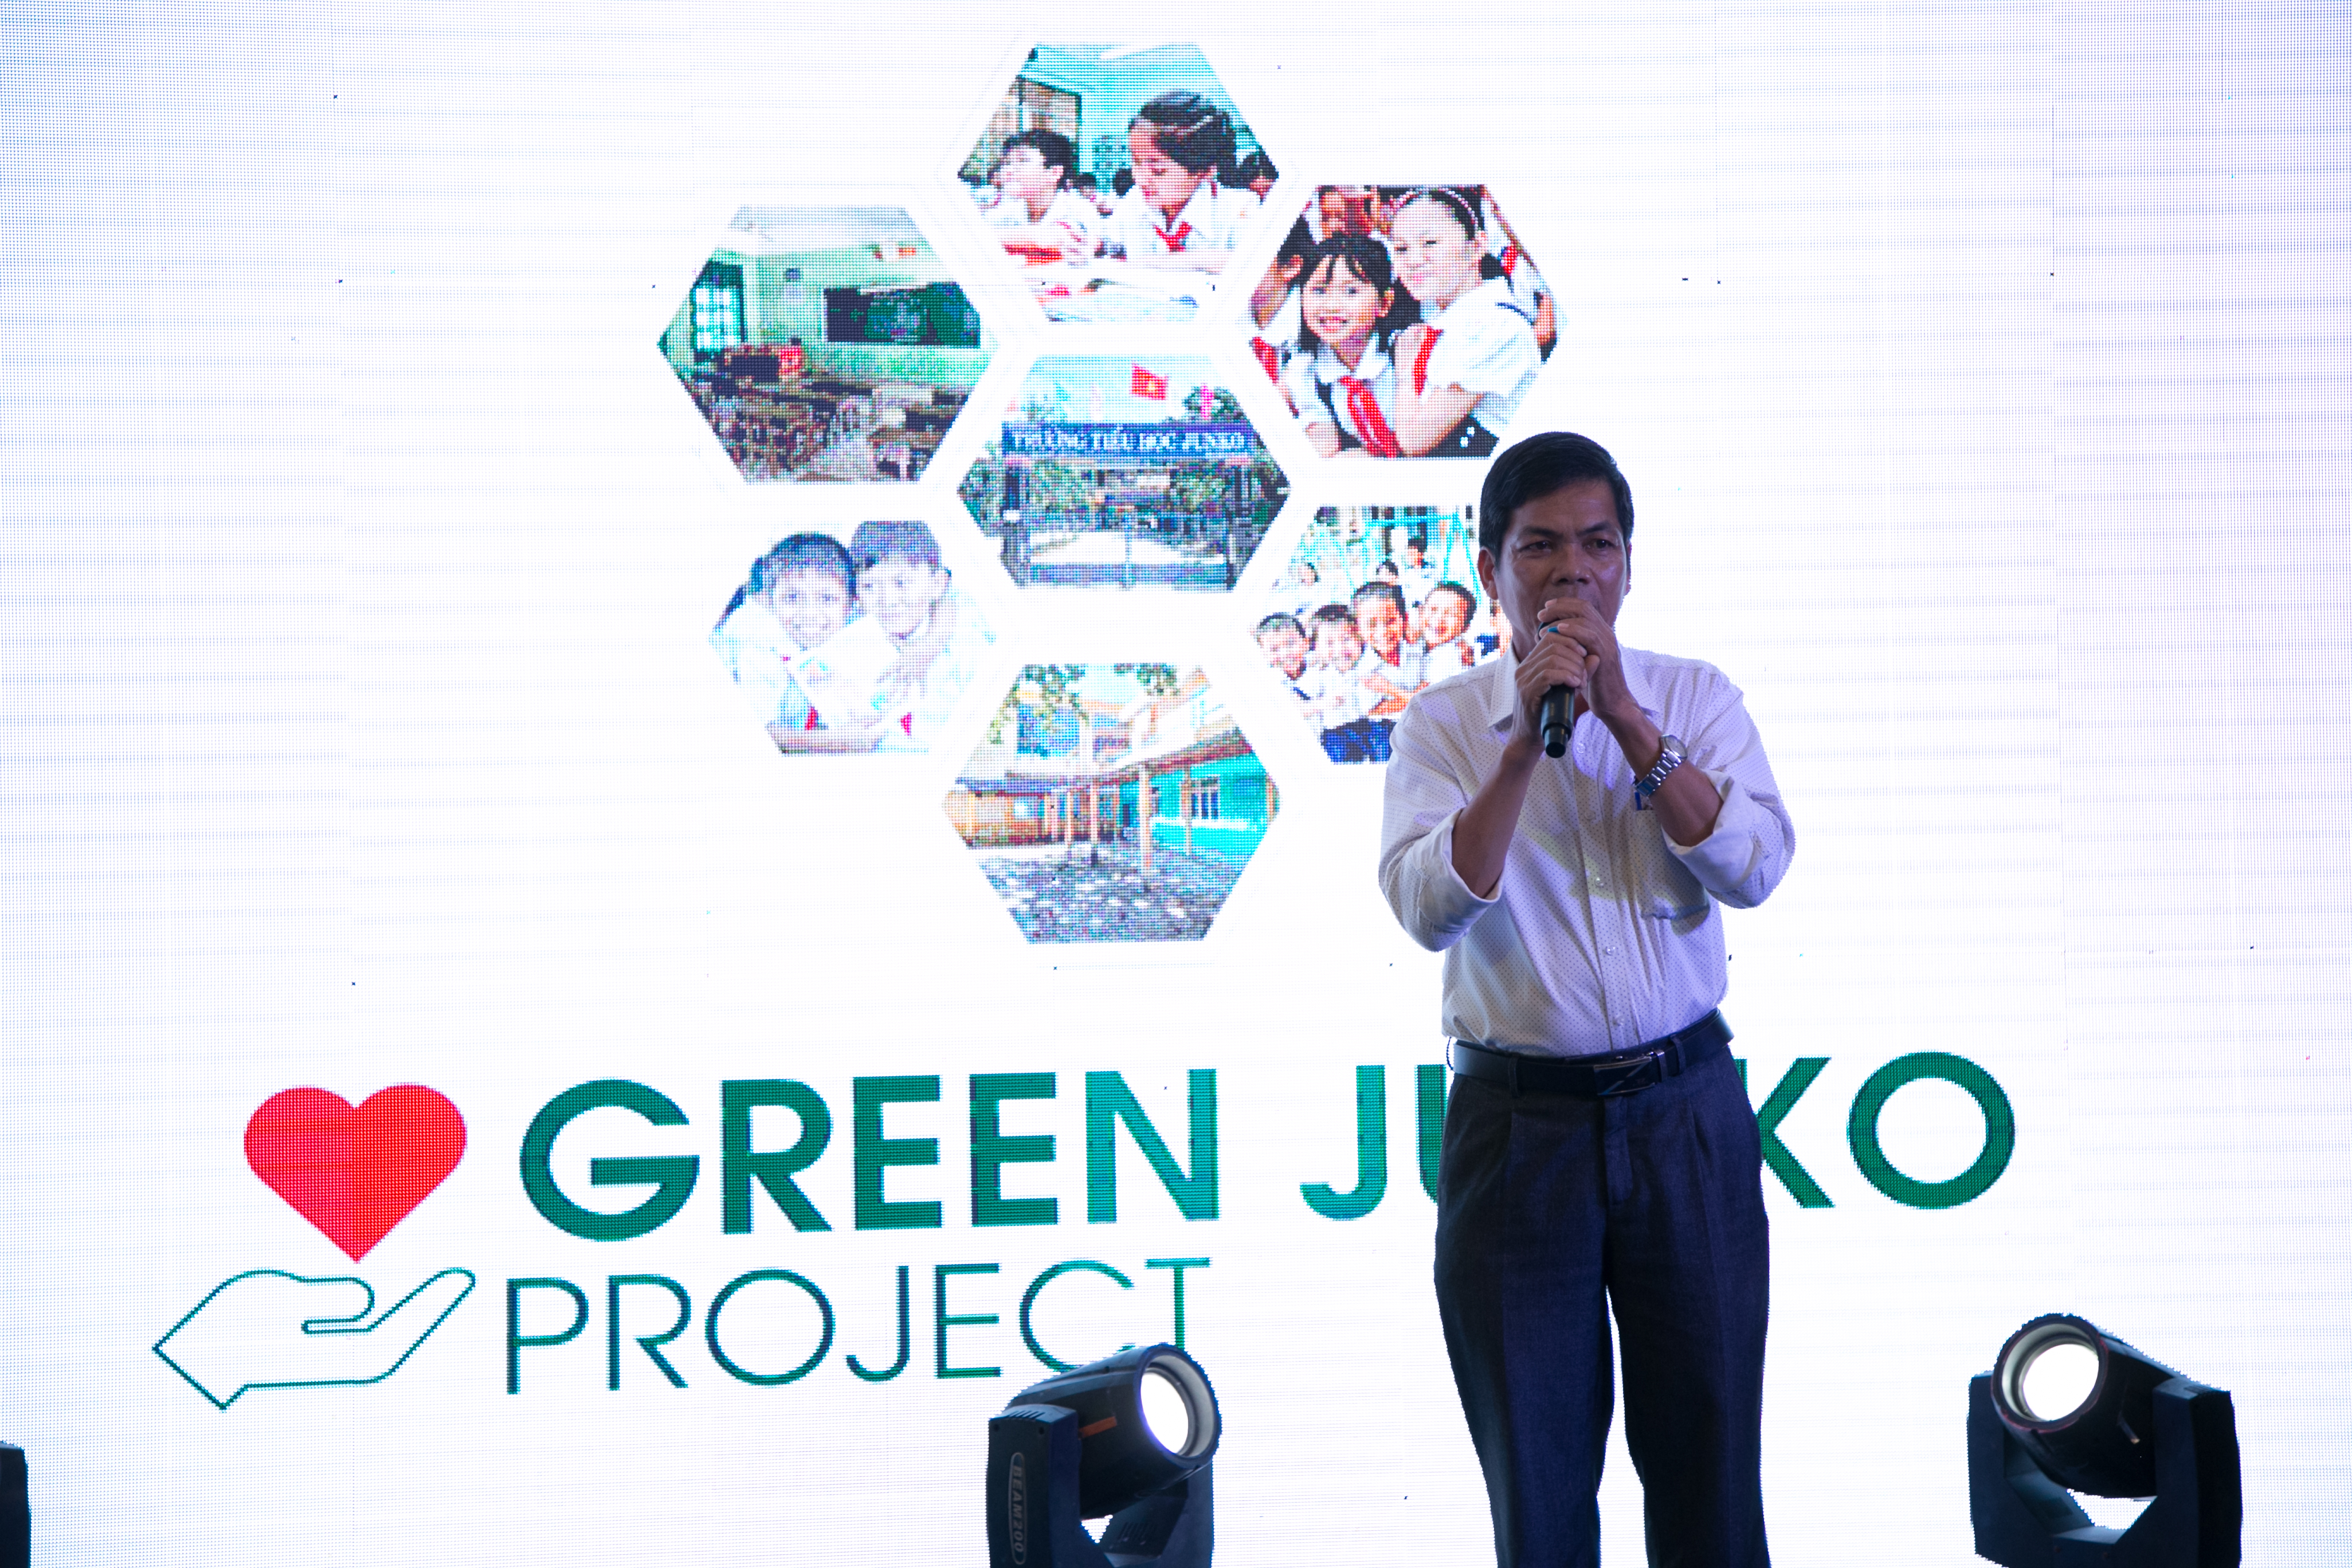 Pin on Project Green Speak